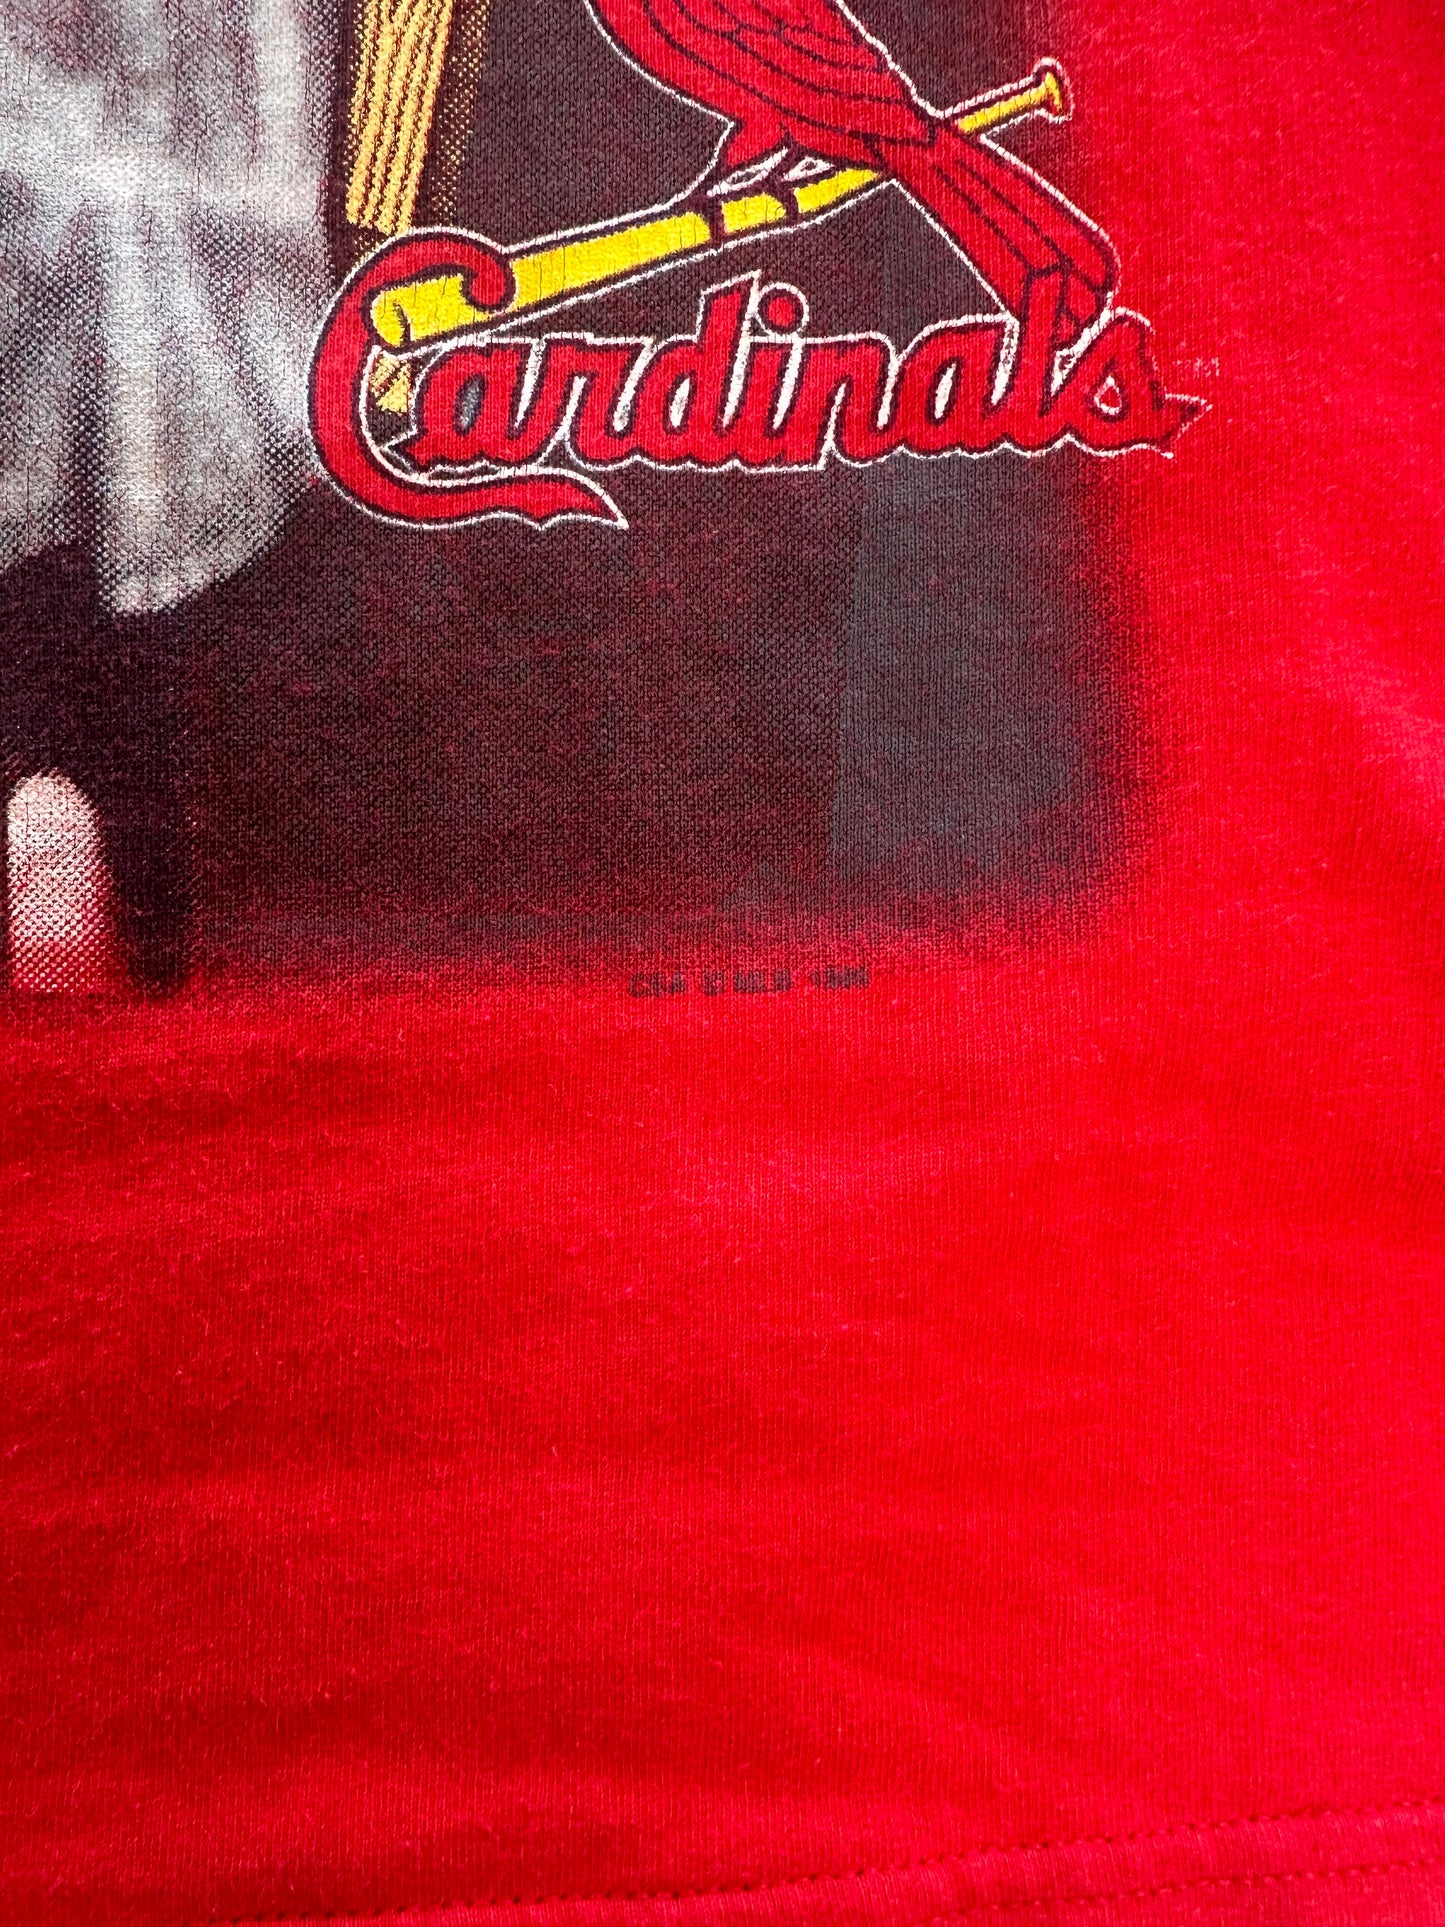 (L) Vintage Stl Cardinals Tee